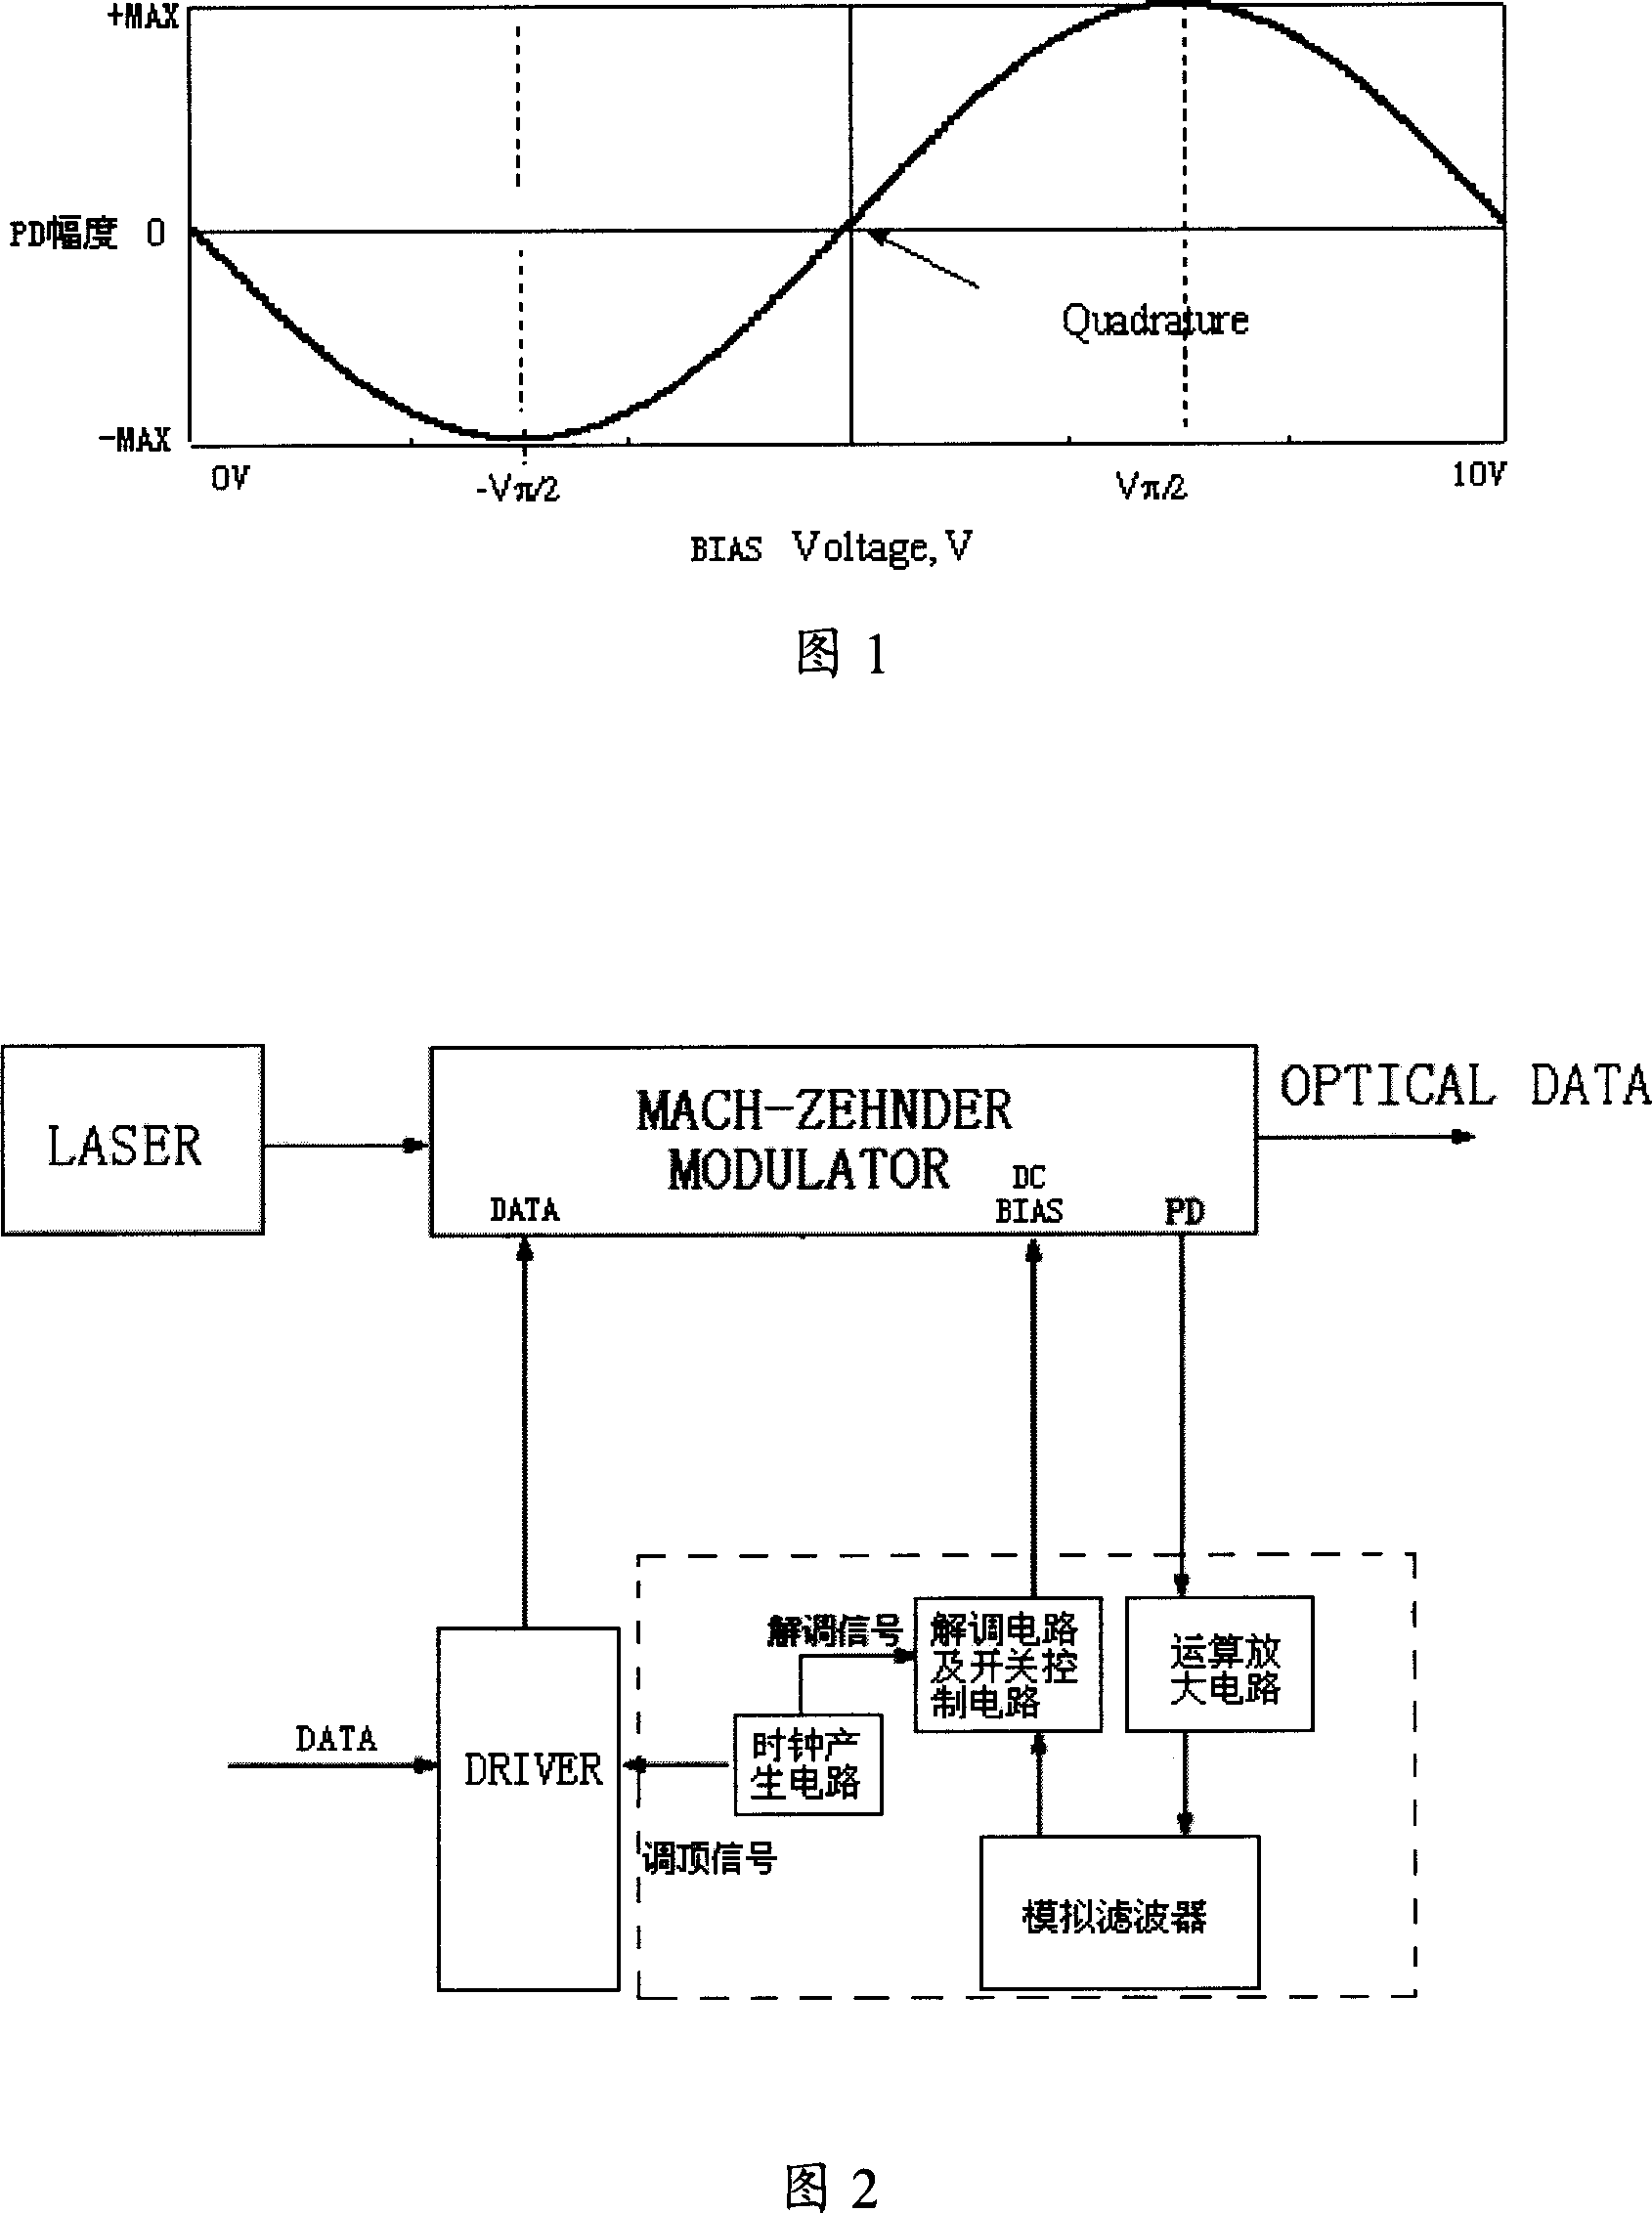 Laser modulator digital automatic bias voltage control device